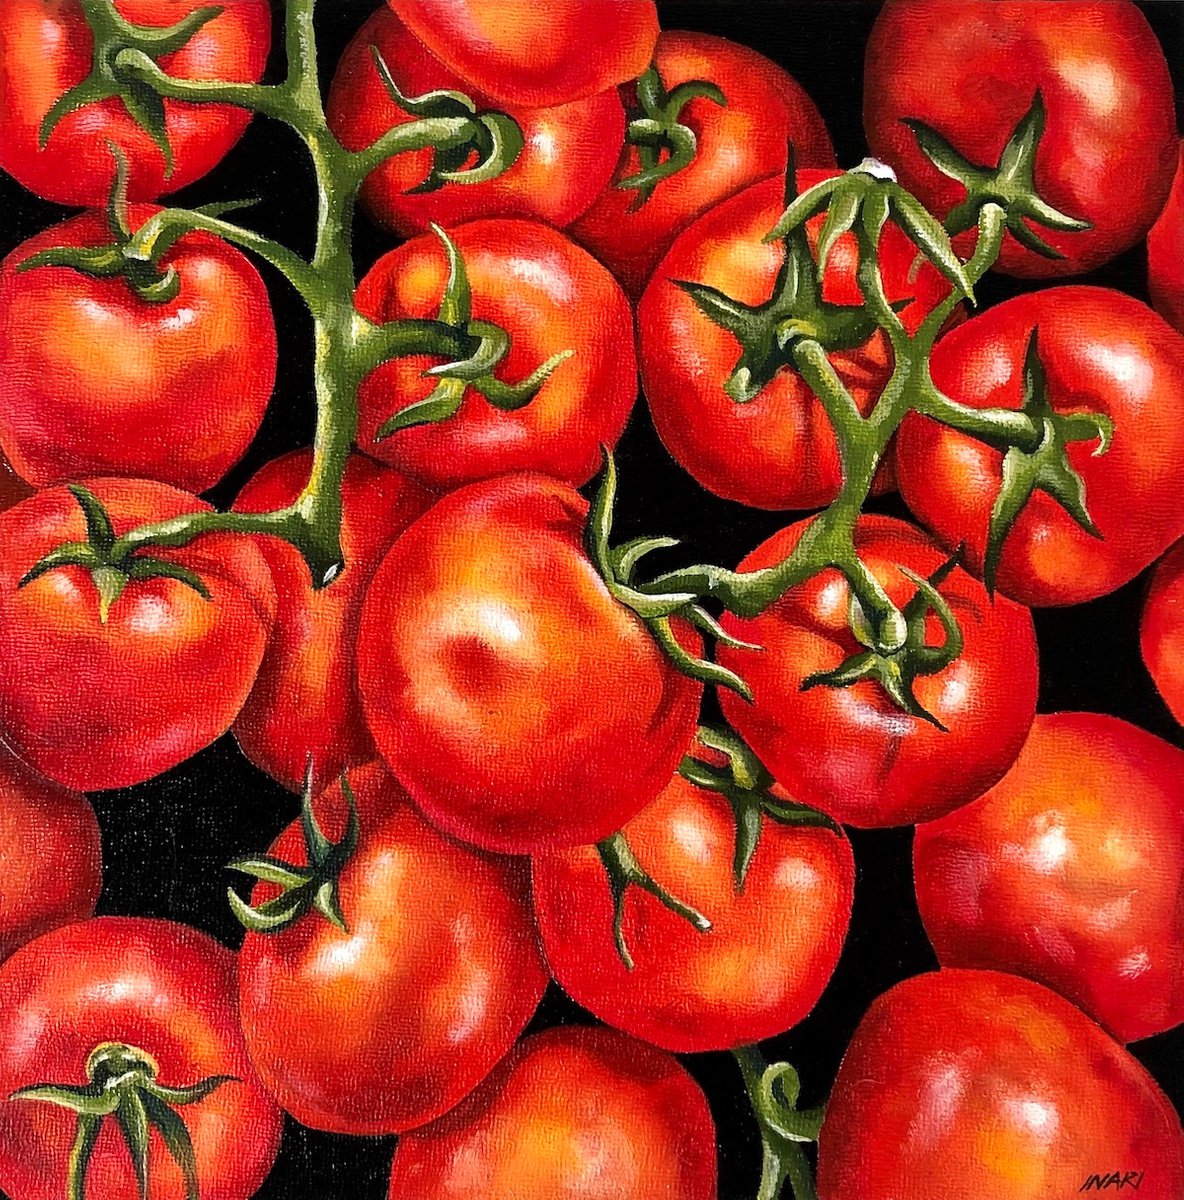 Tomatoes by Inari